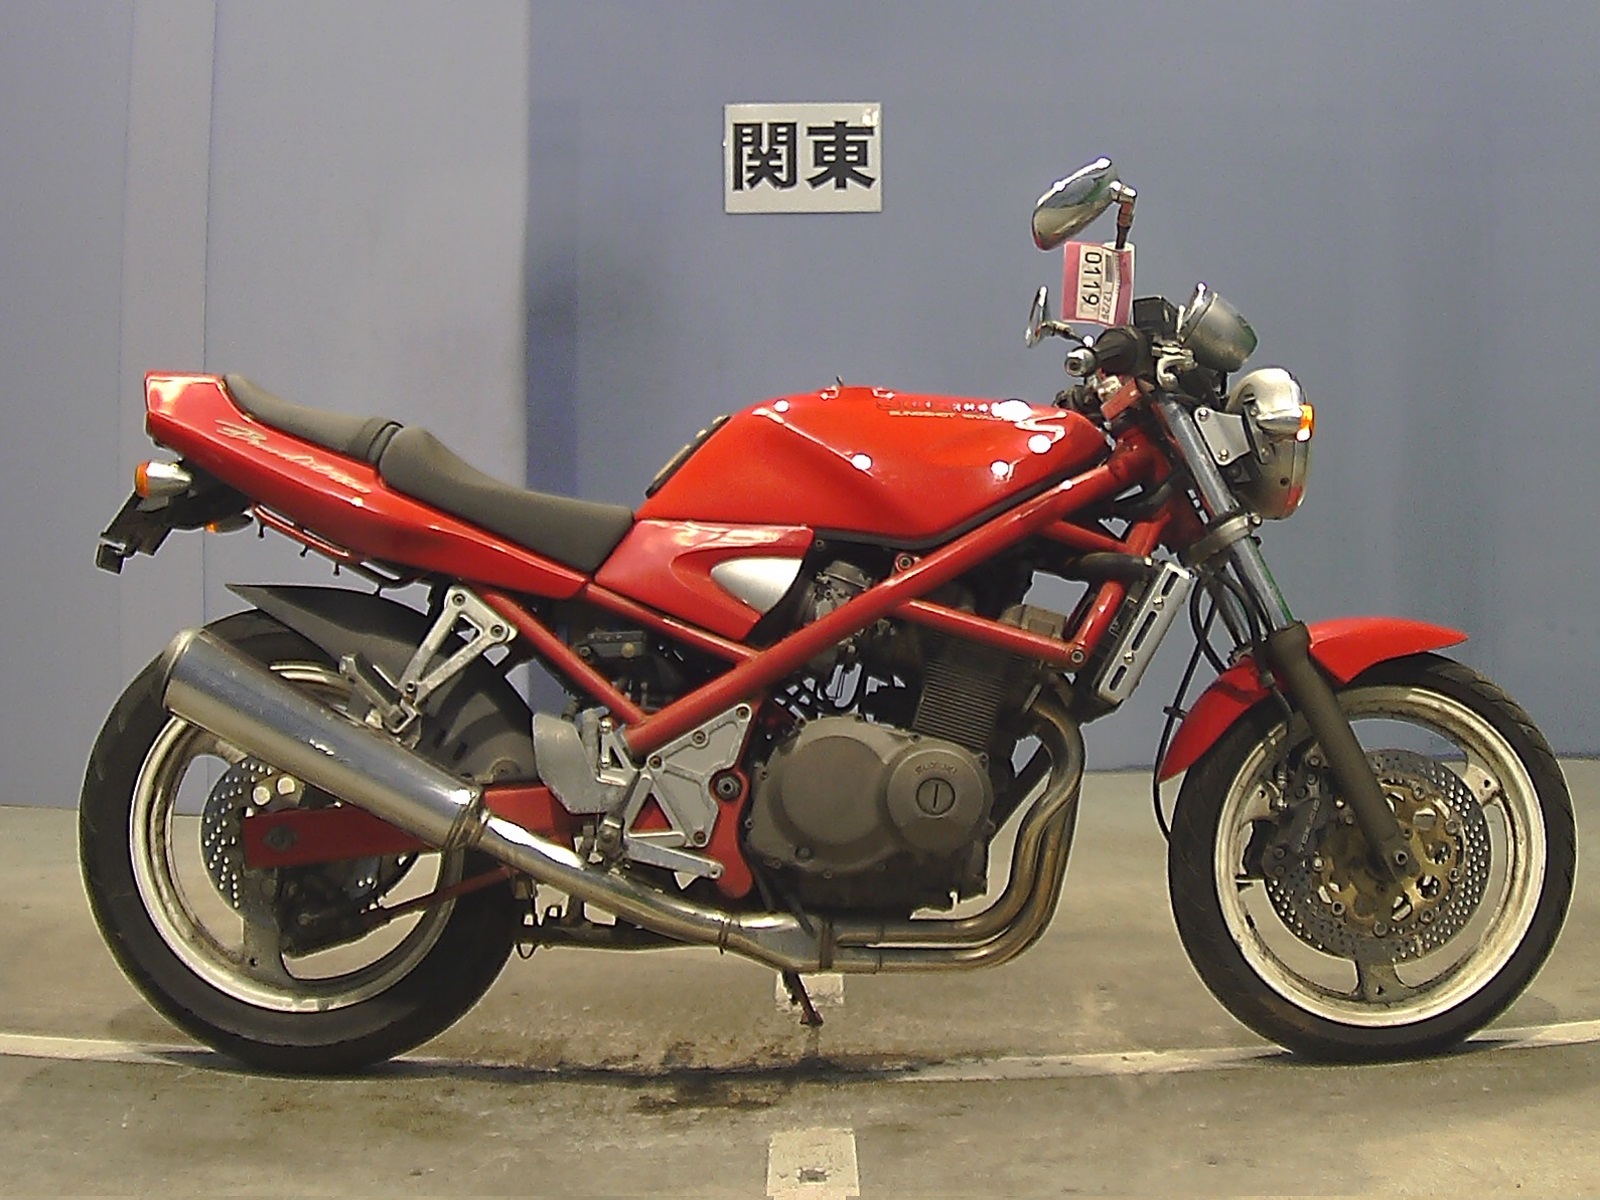 Мотоцикл Suzuki Bandit (Сузуки Бандит) GSF 400 краткий обзор